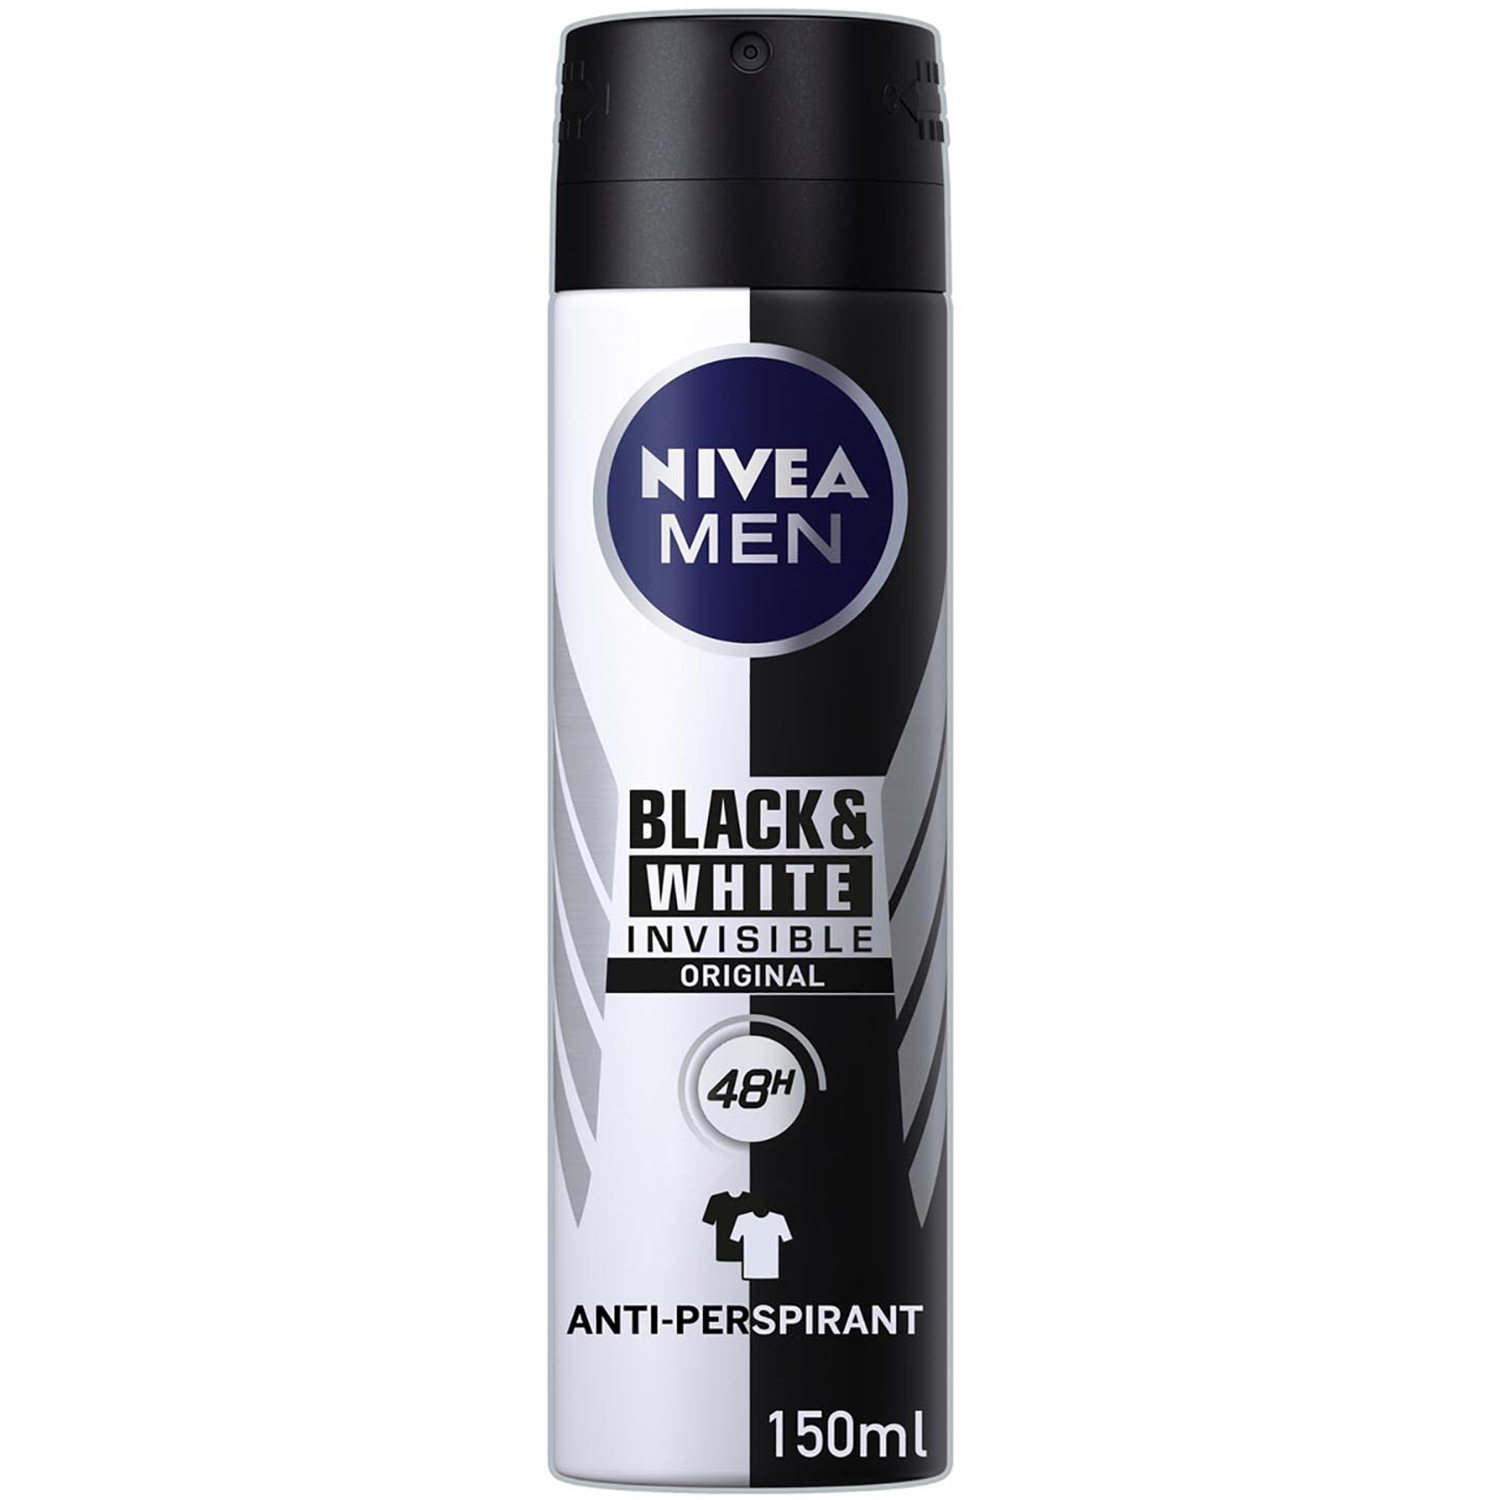 Nivea Men Black and White Invisible Original Anti-Perspirant Spray - Black Image